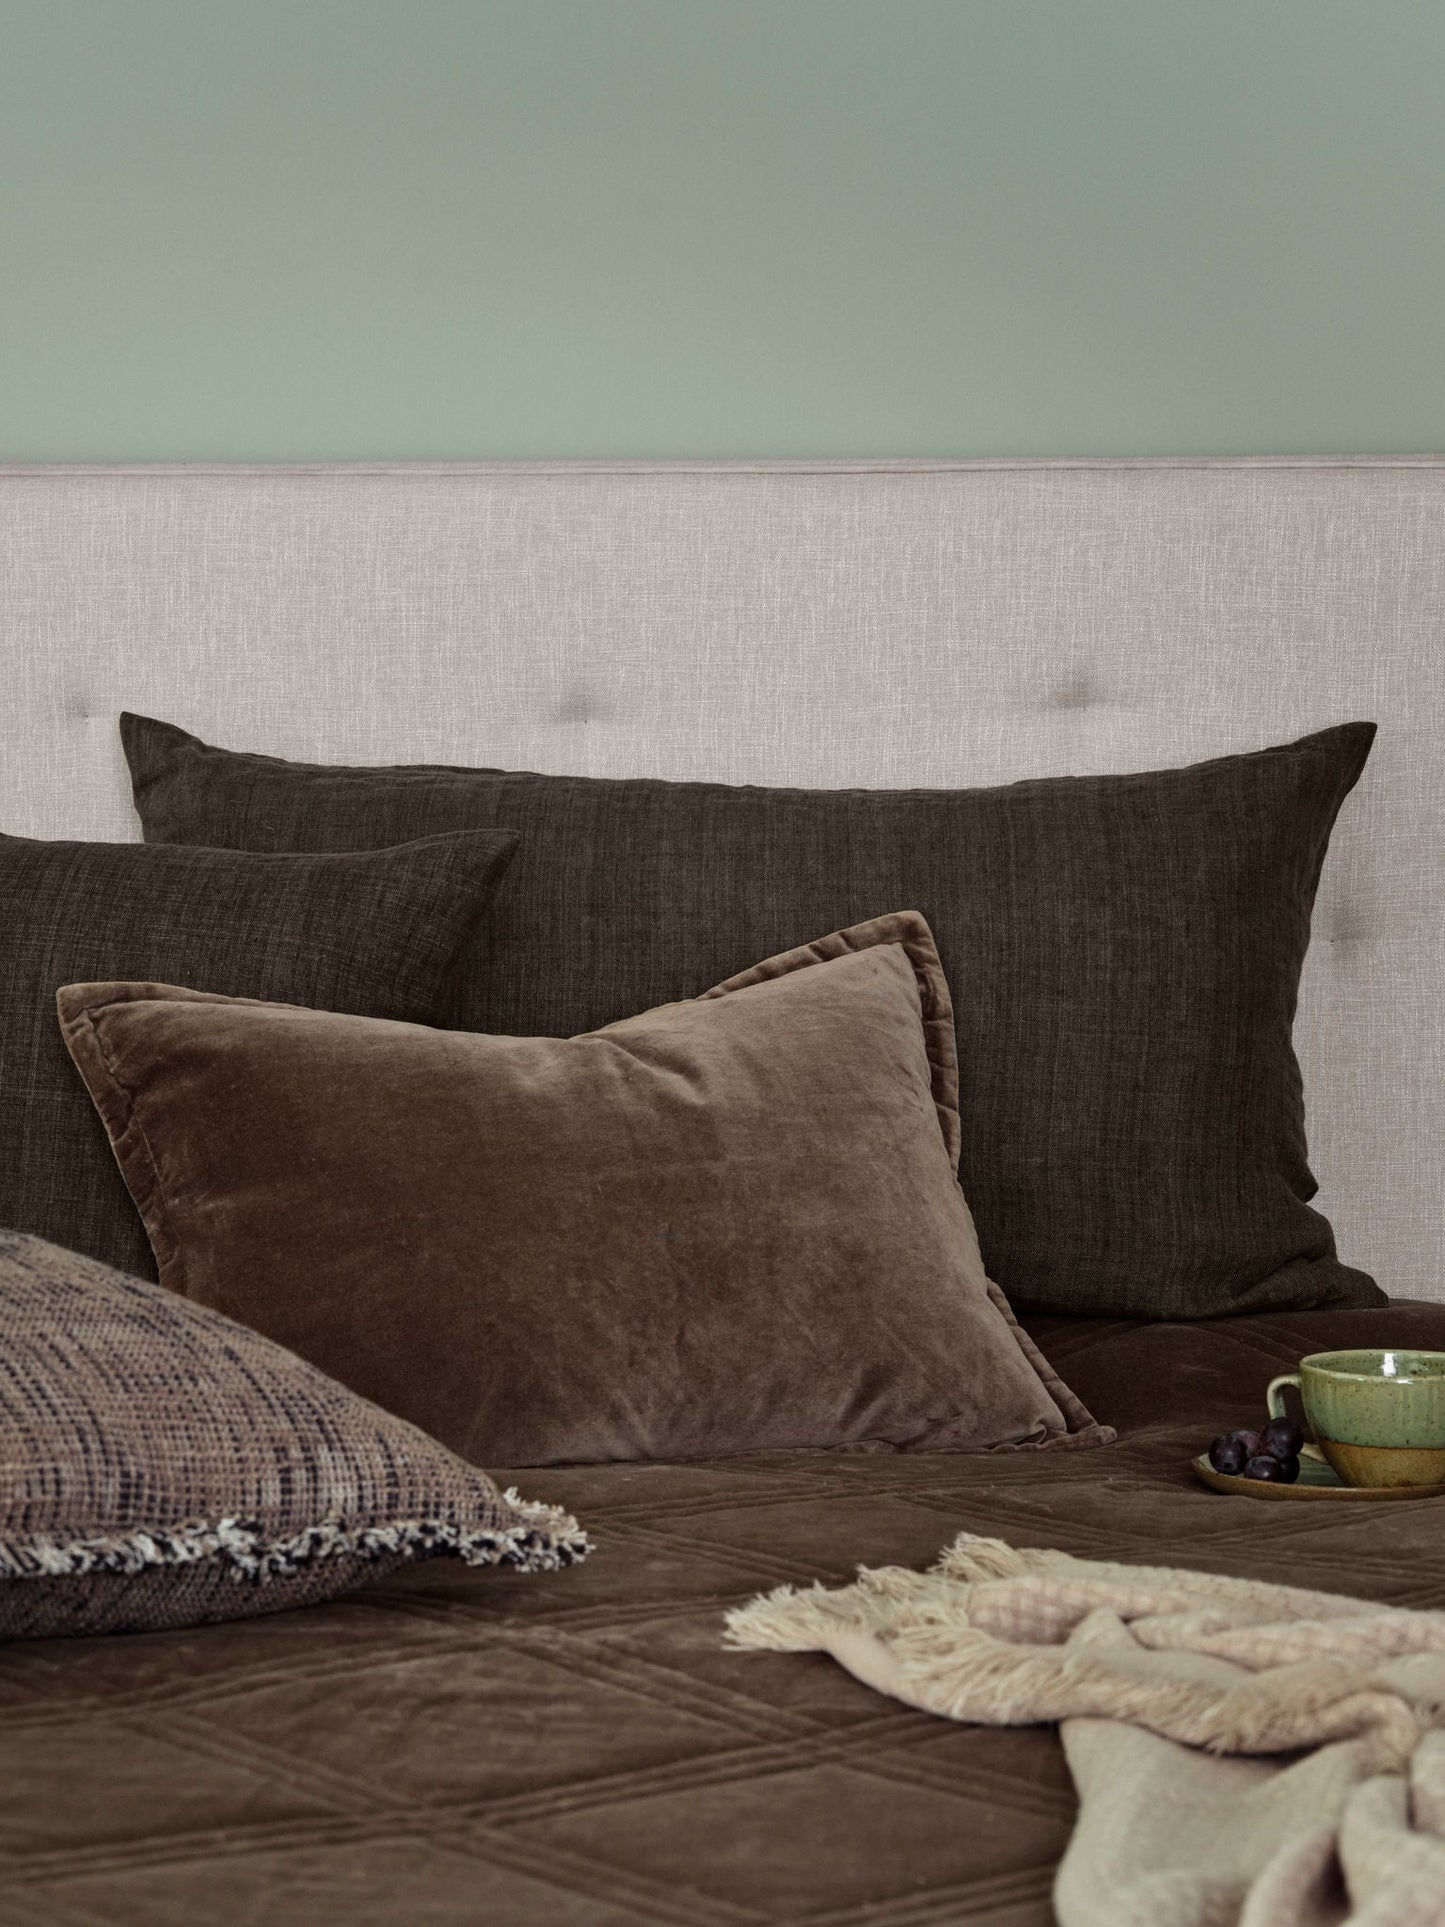 Luxury Light Linen Cushion Cover  - CHESTNUT / Outlet